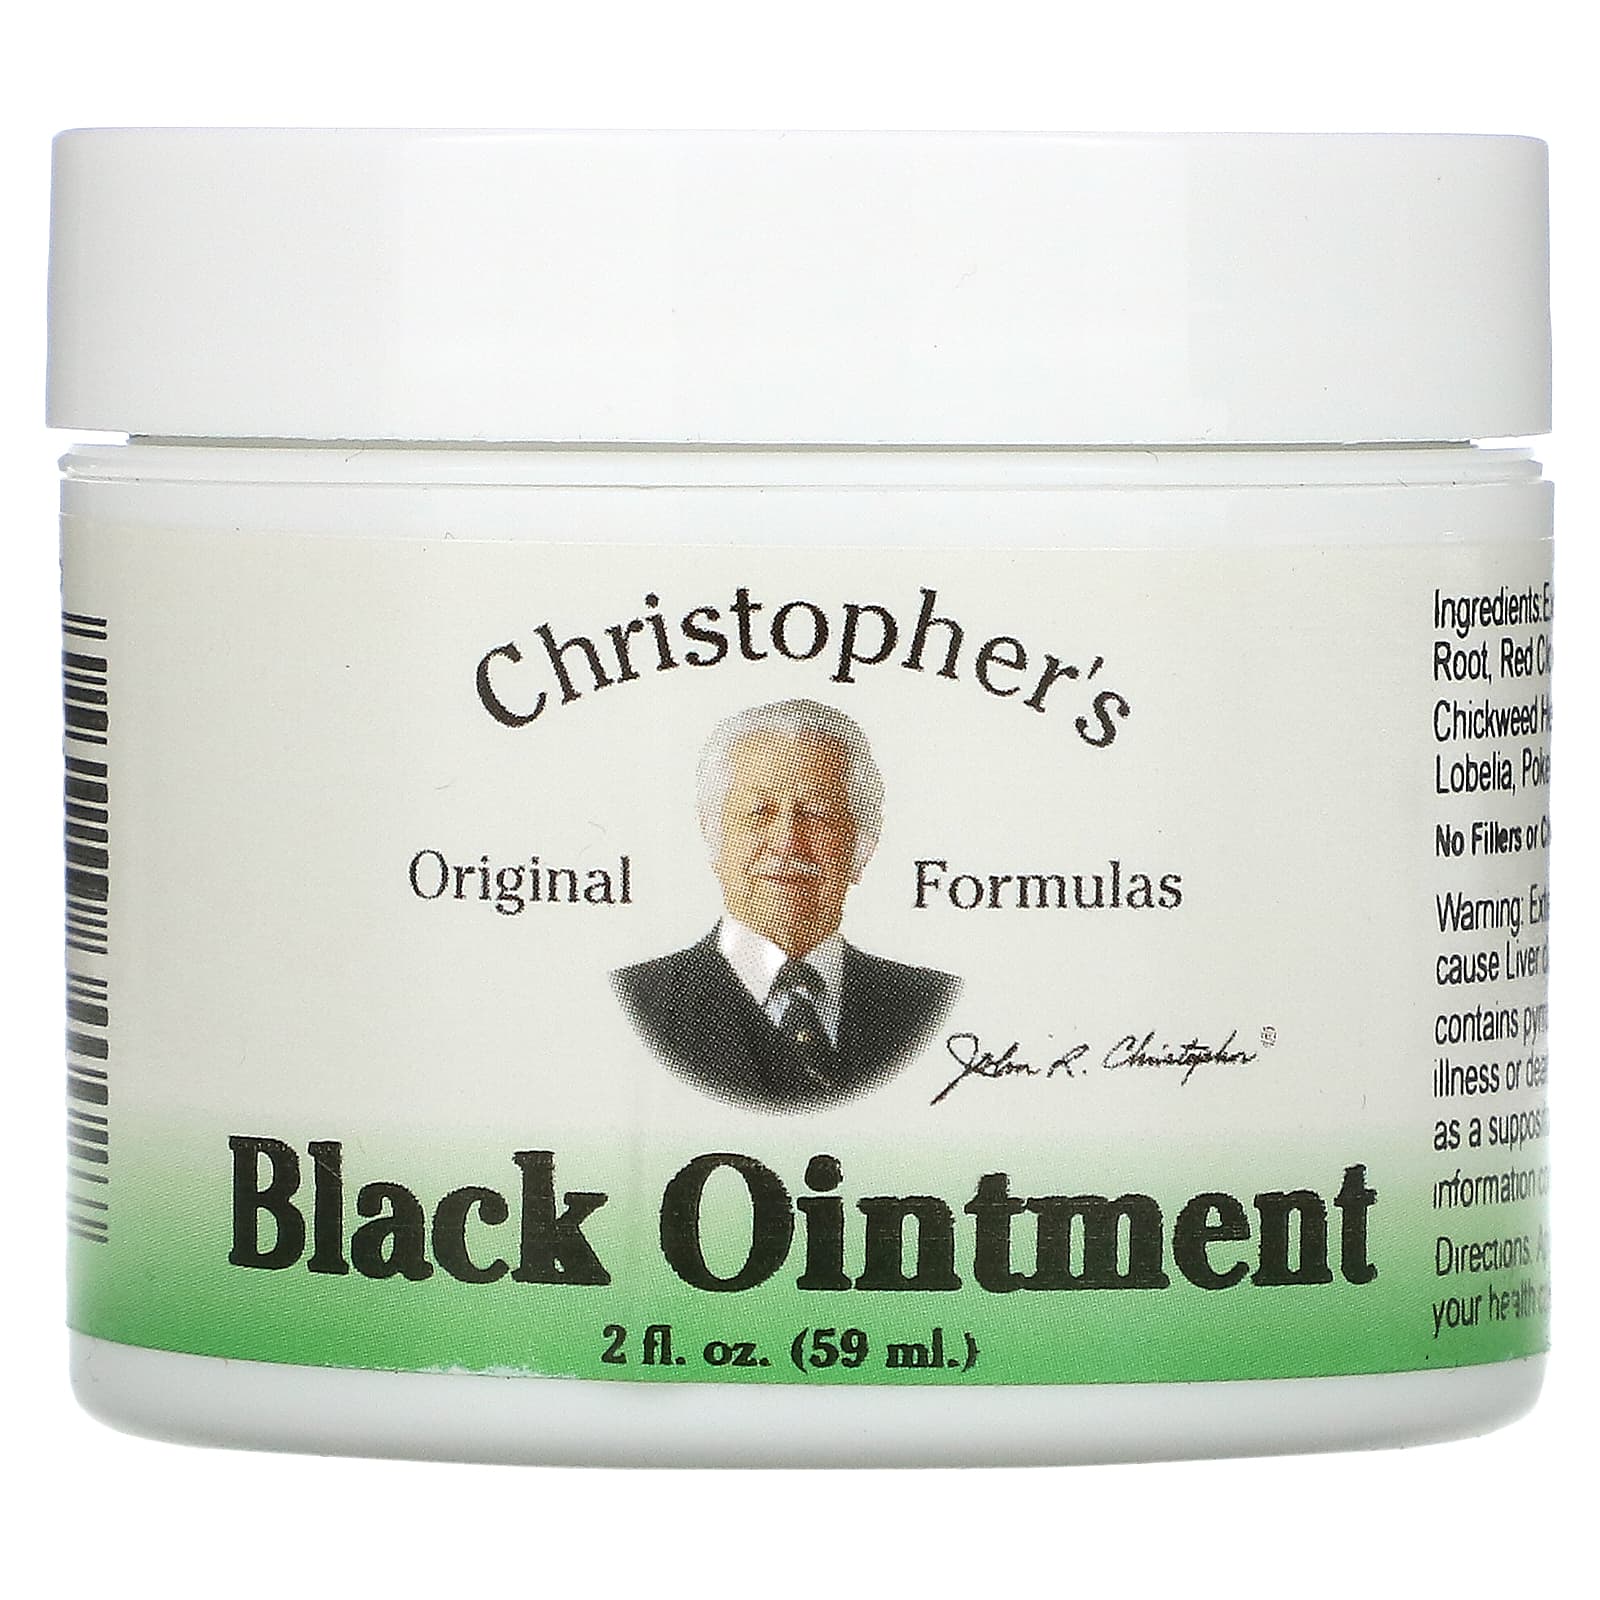 Christopher's Original Formulas Black Ointment противовоспалительная 59 мл (2 жидкие унции) christopher s original formulas black ointment противовоспалительная 59 мл 2 жидкие унции